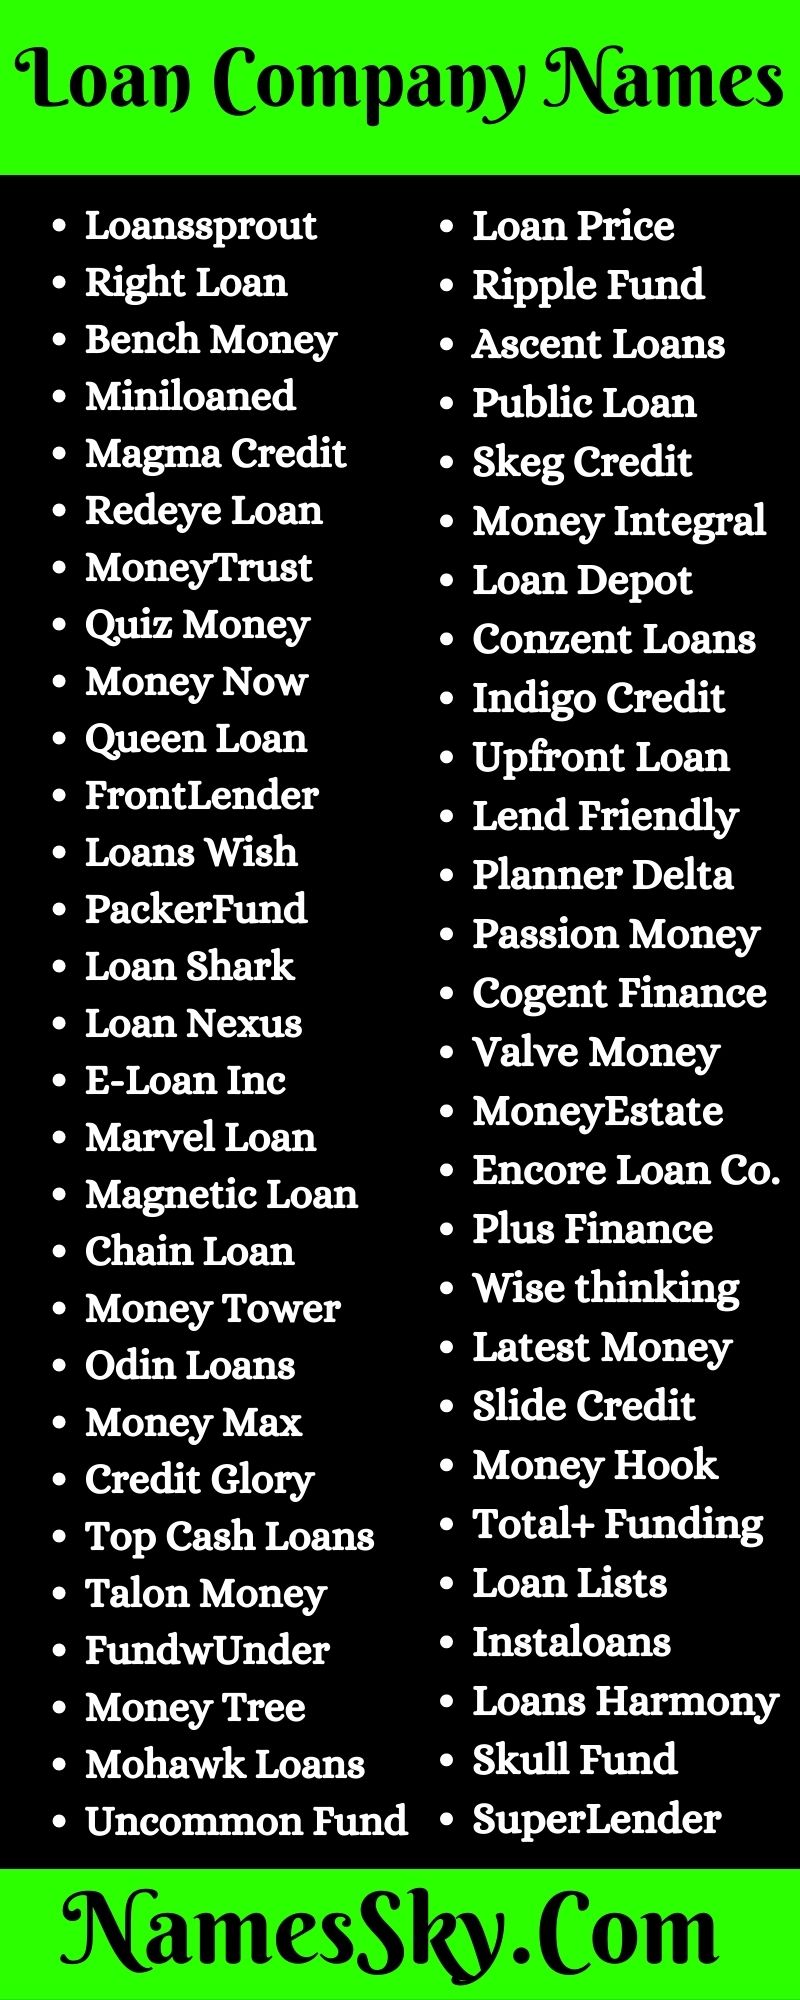 Loan Company Names